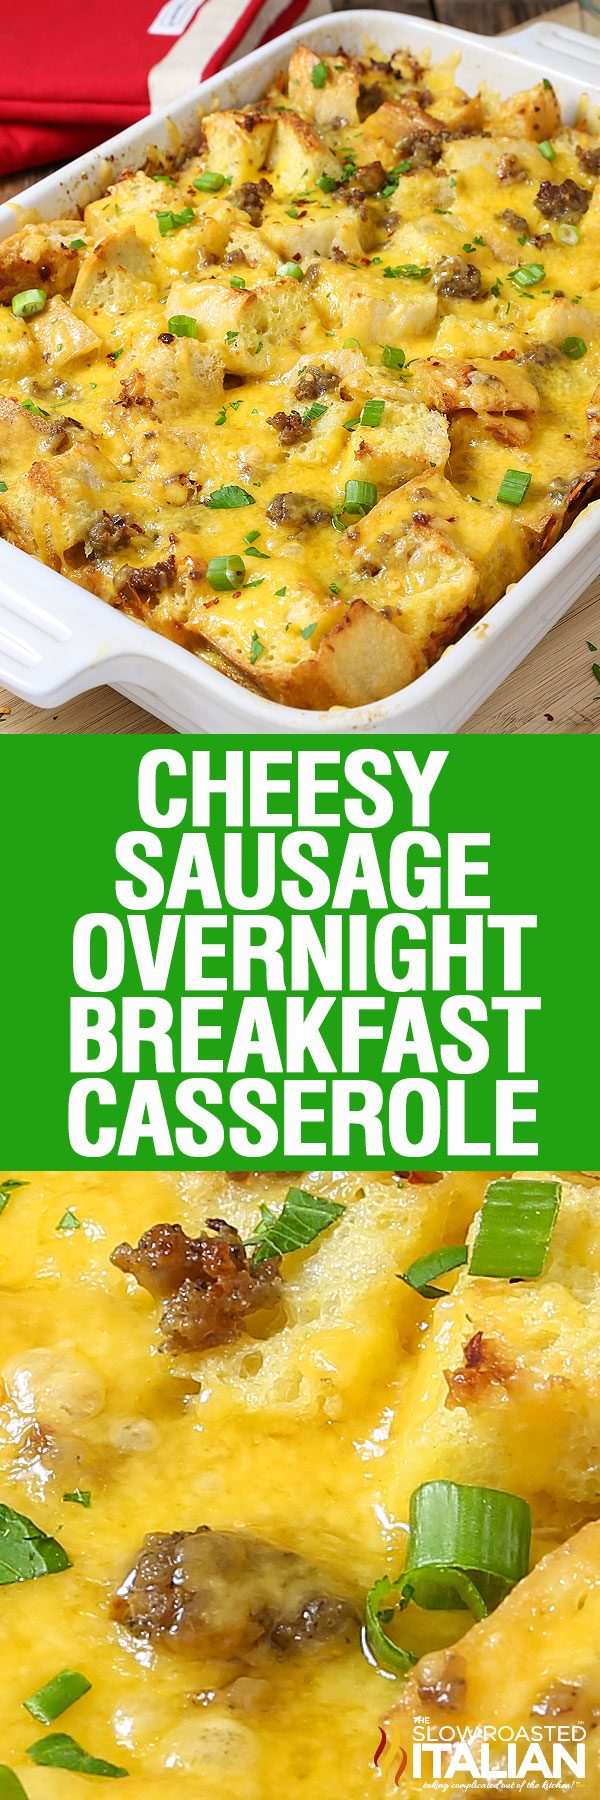 cheesy-sausage-overnight-breakfast-casserole-pin-3451491